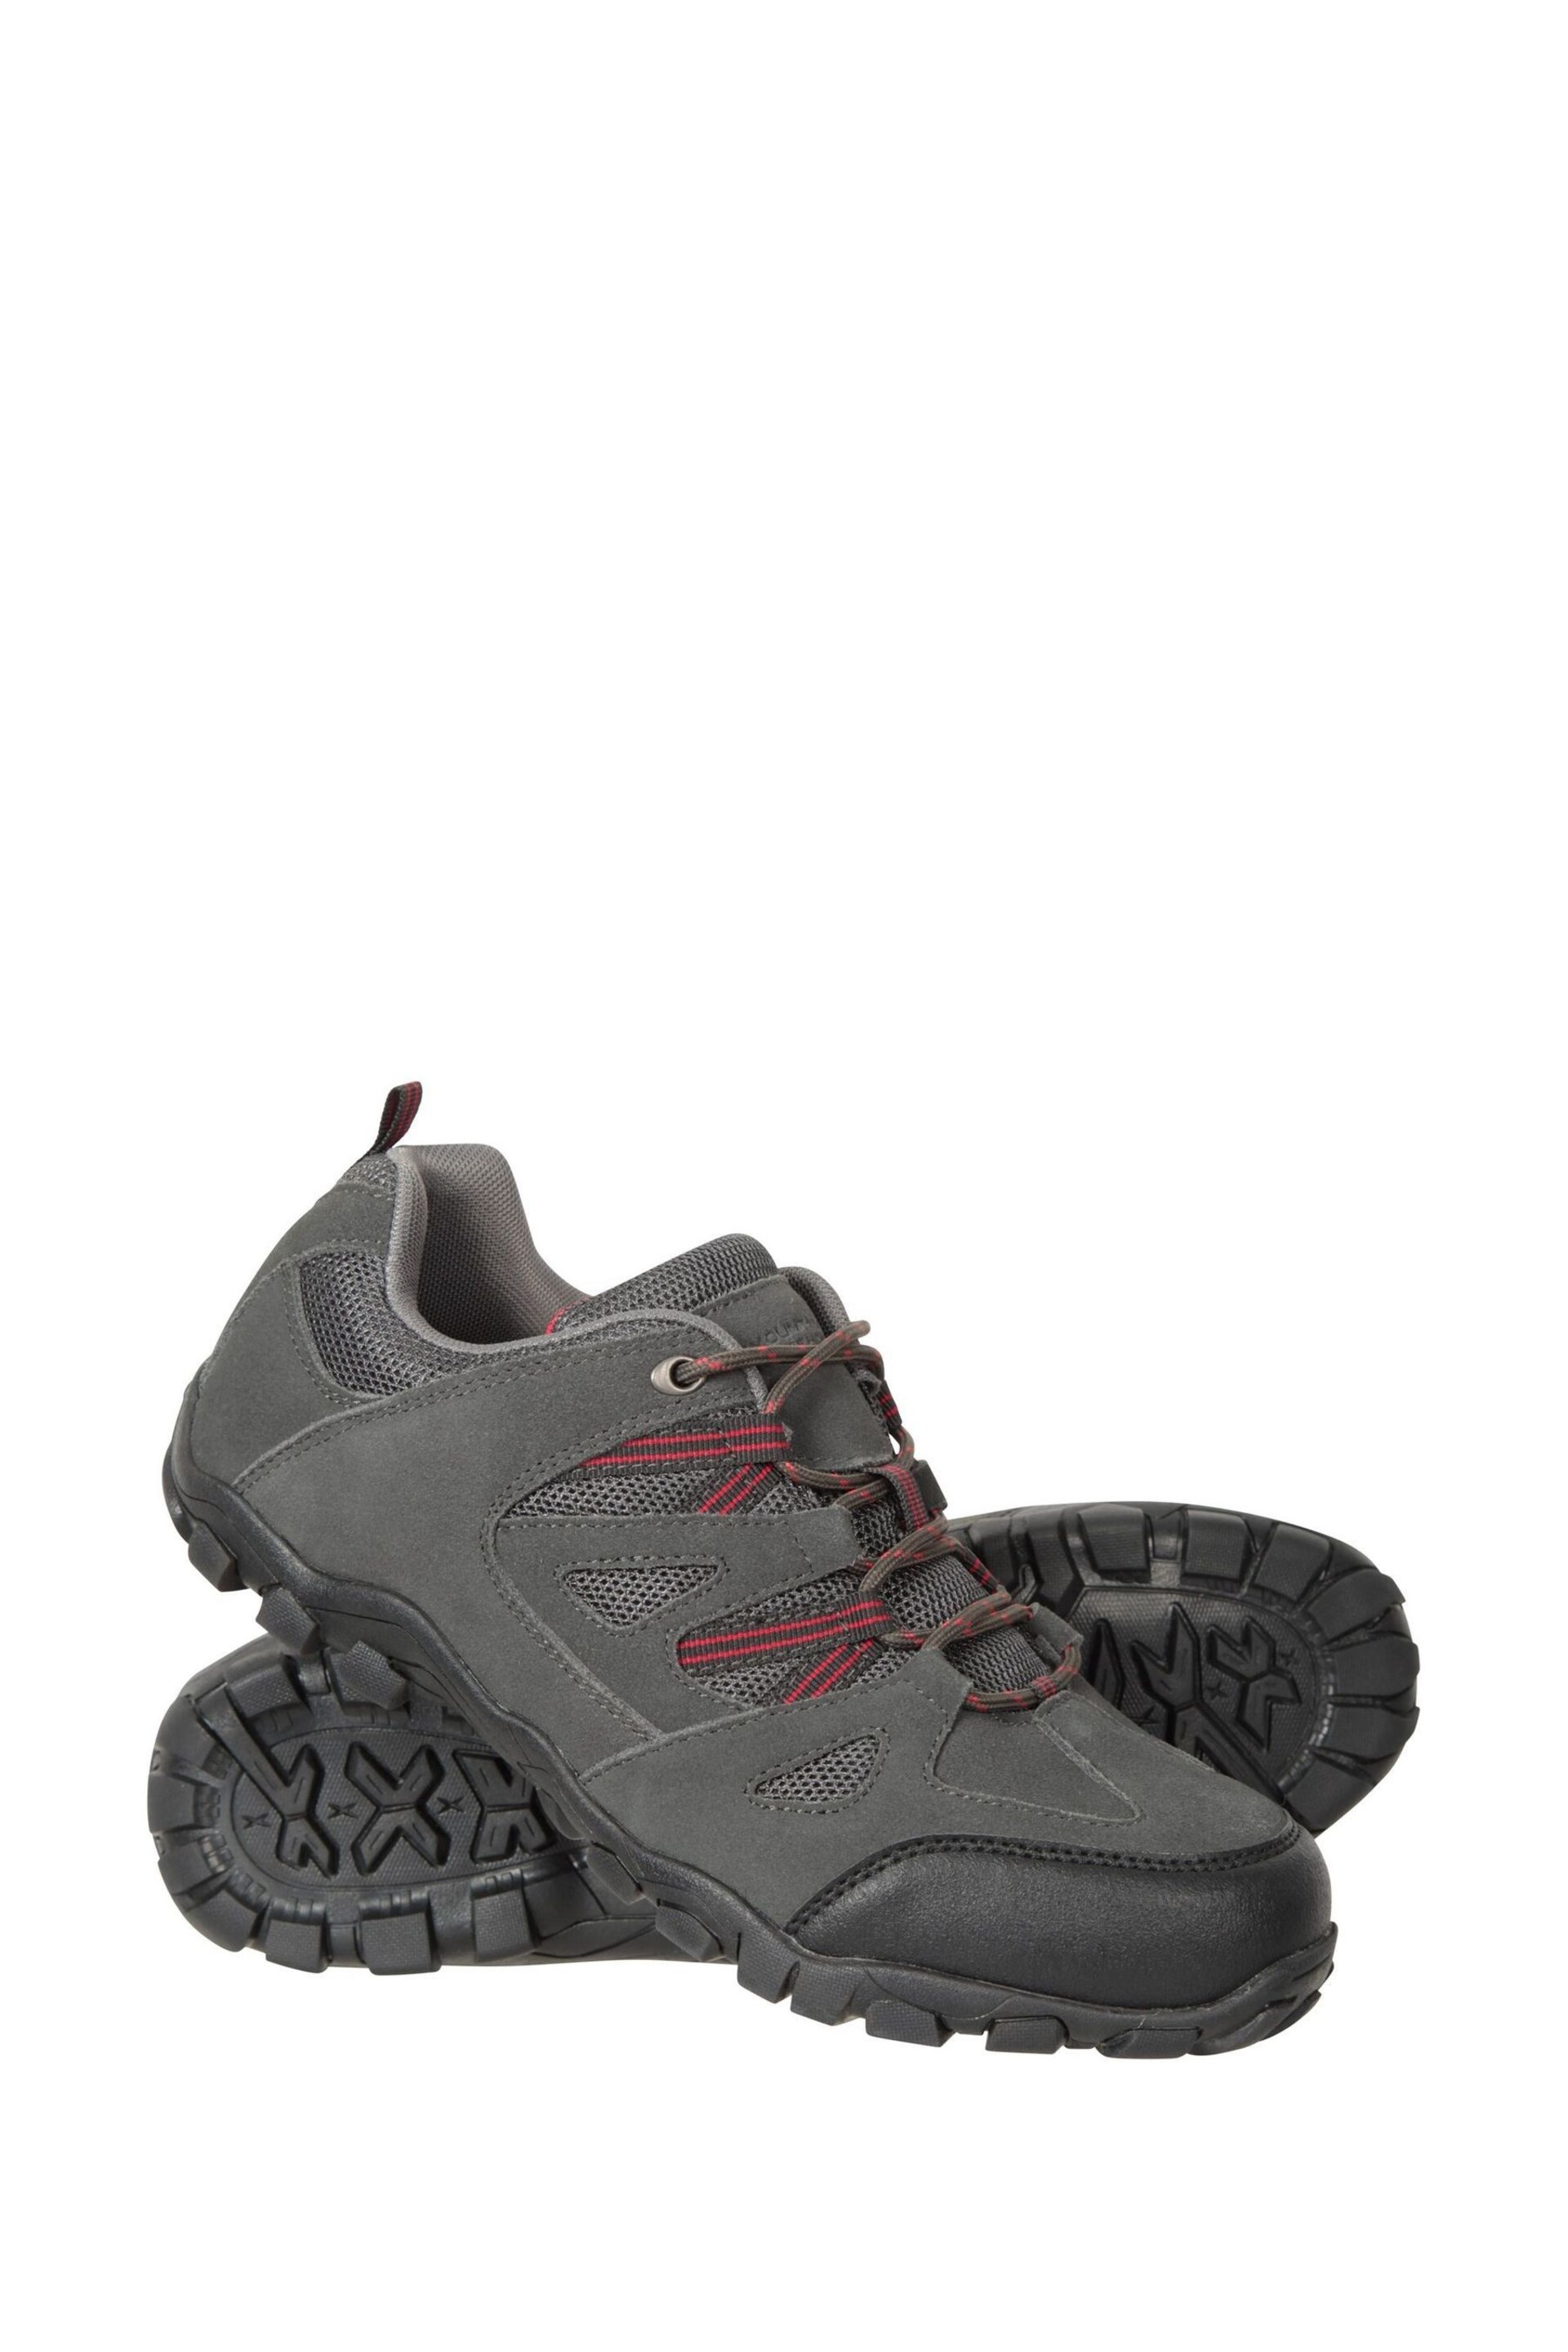 Mountain Warehouse Grey Mens Outdoor III Walking Shoes - Image 1 of 5